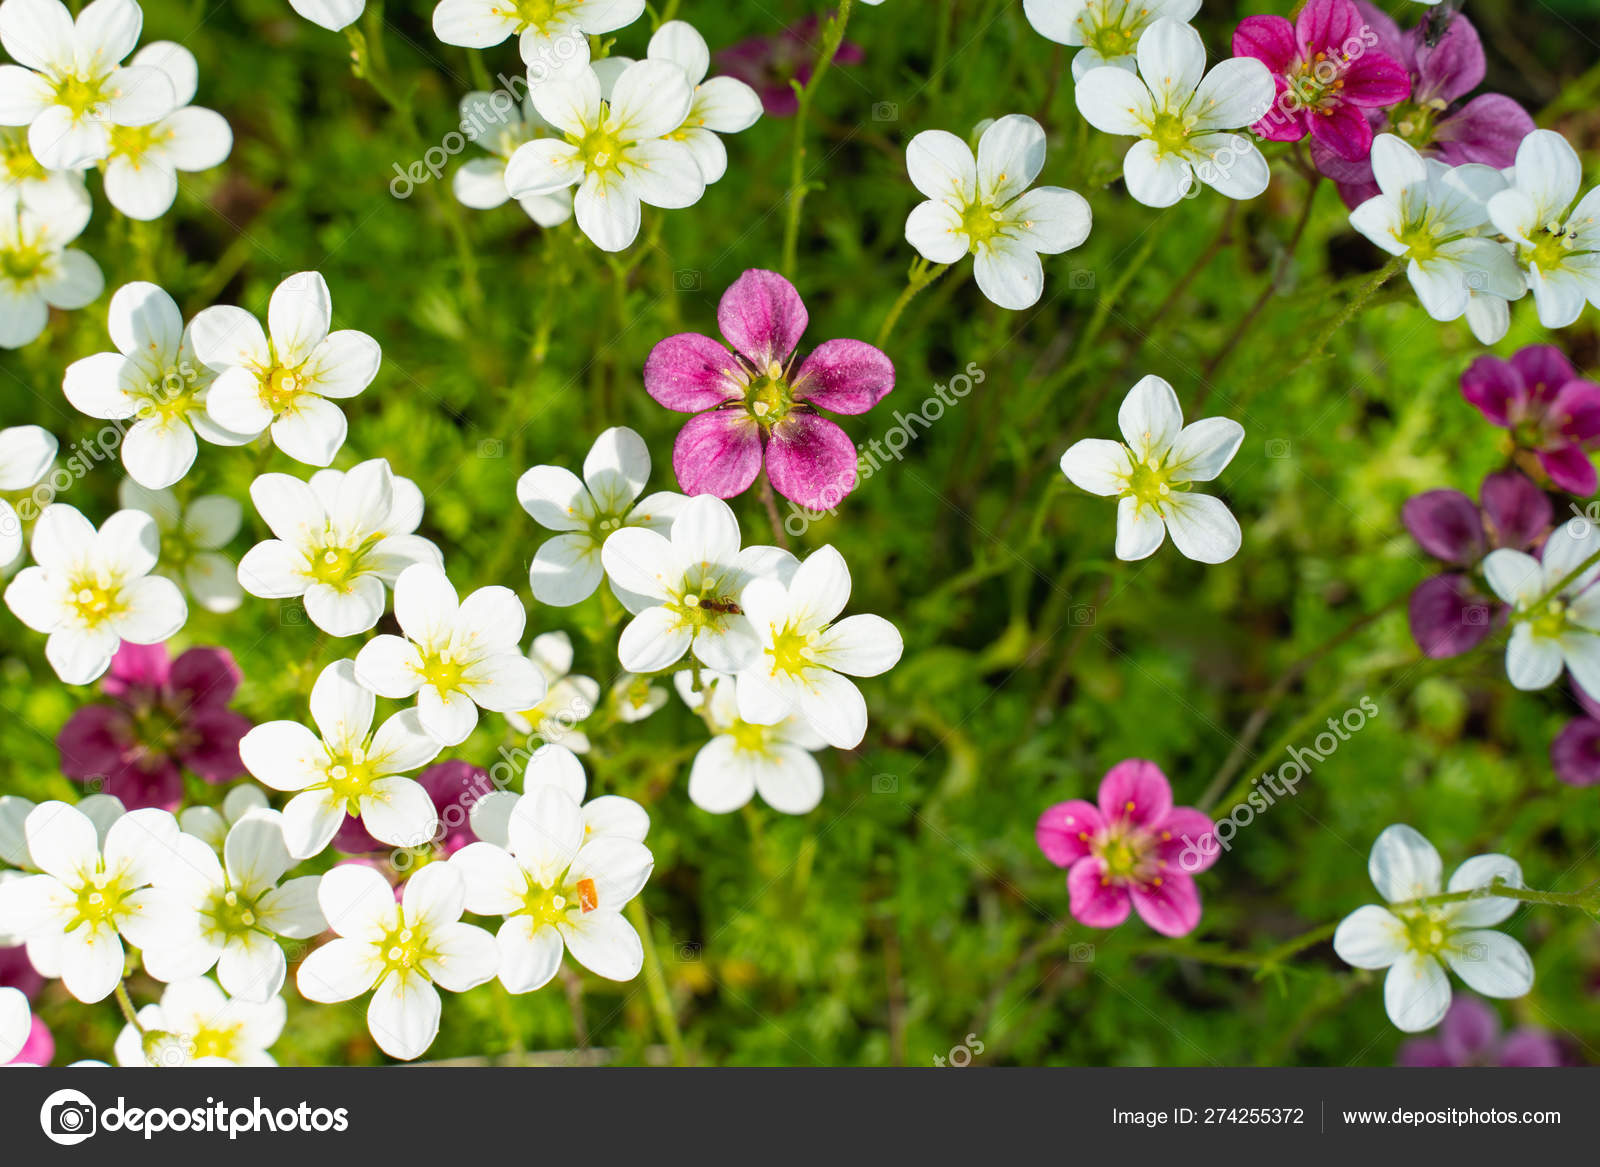 Lobularia Alyssum Flowers In The Flower Bed Decorative Plants Of The Botanical Garden Stock Photo C Vladimmir 274255372